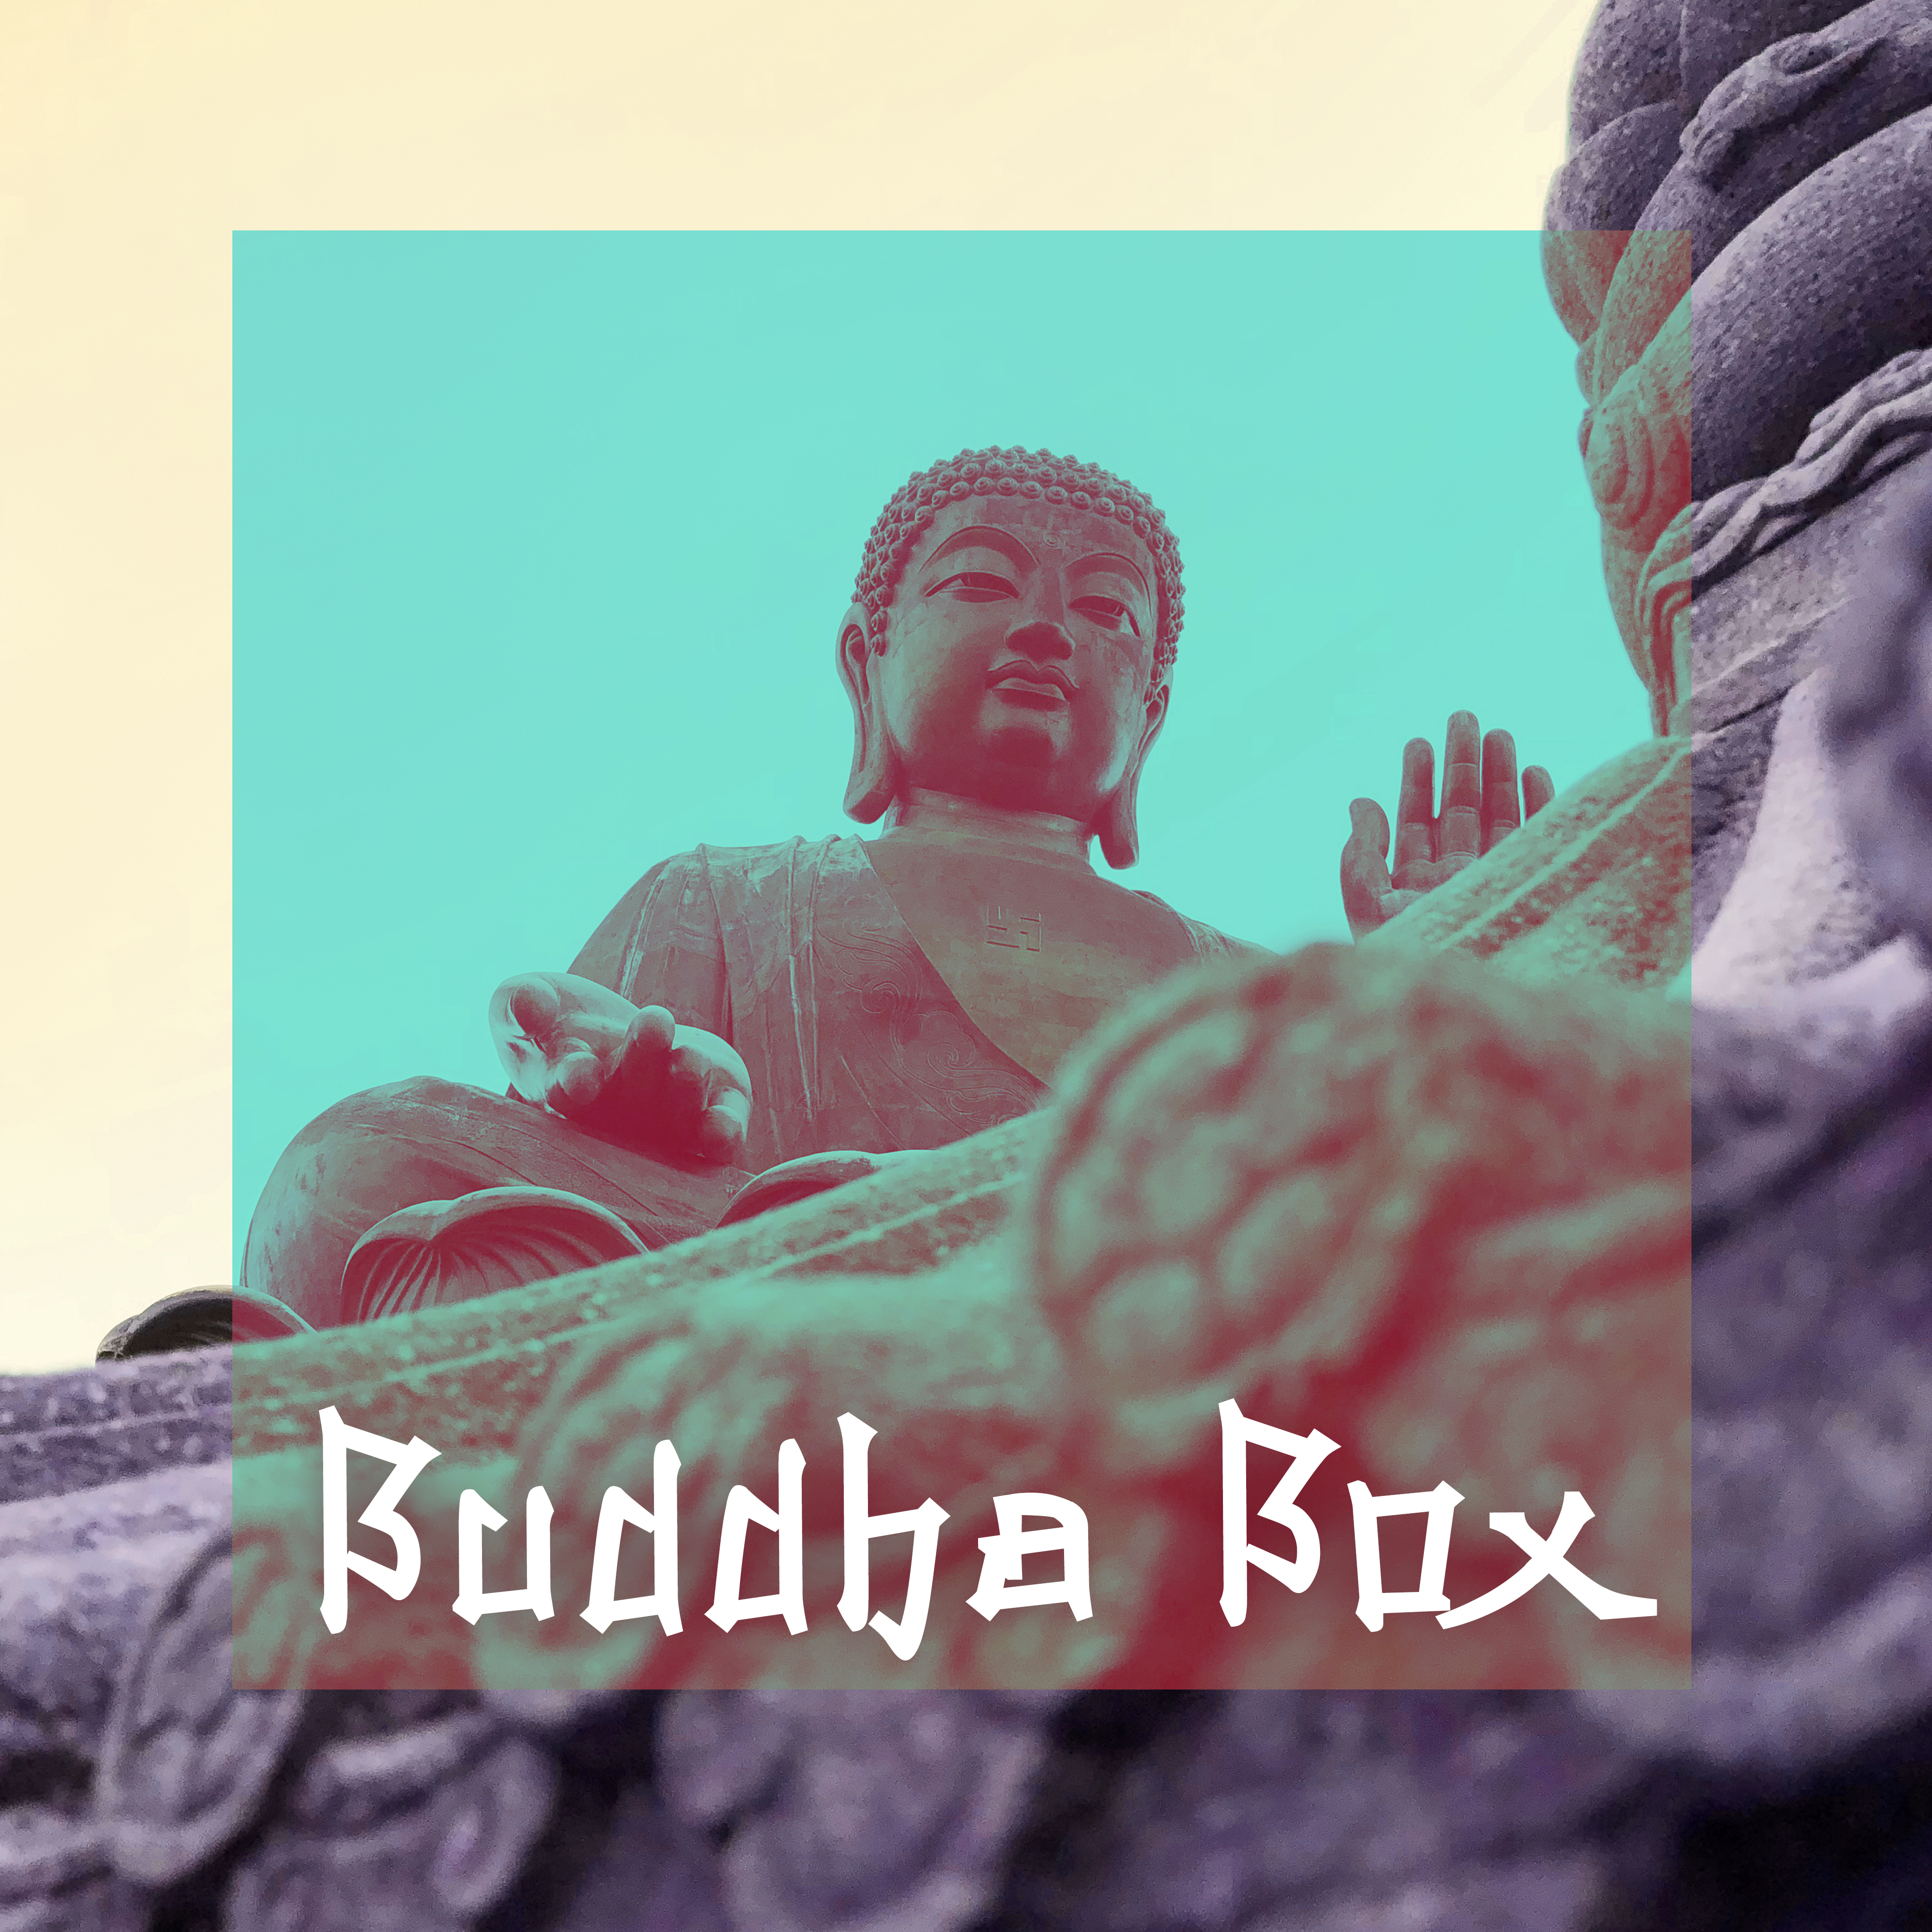 Buddha Box